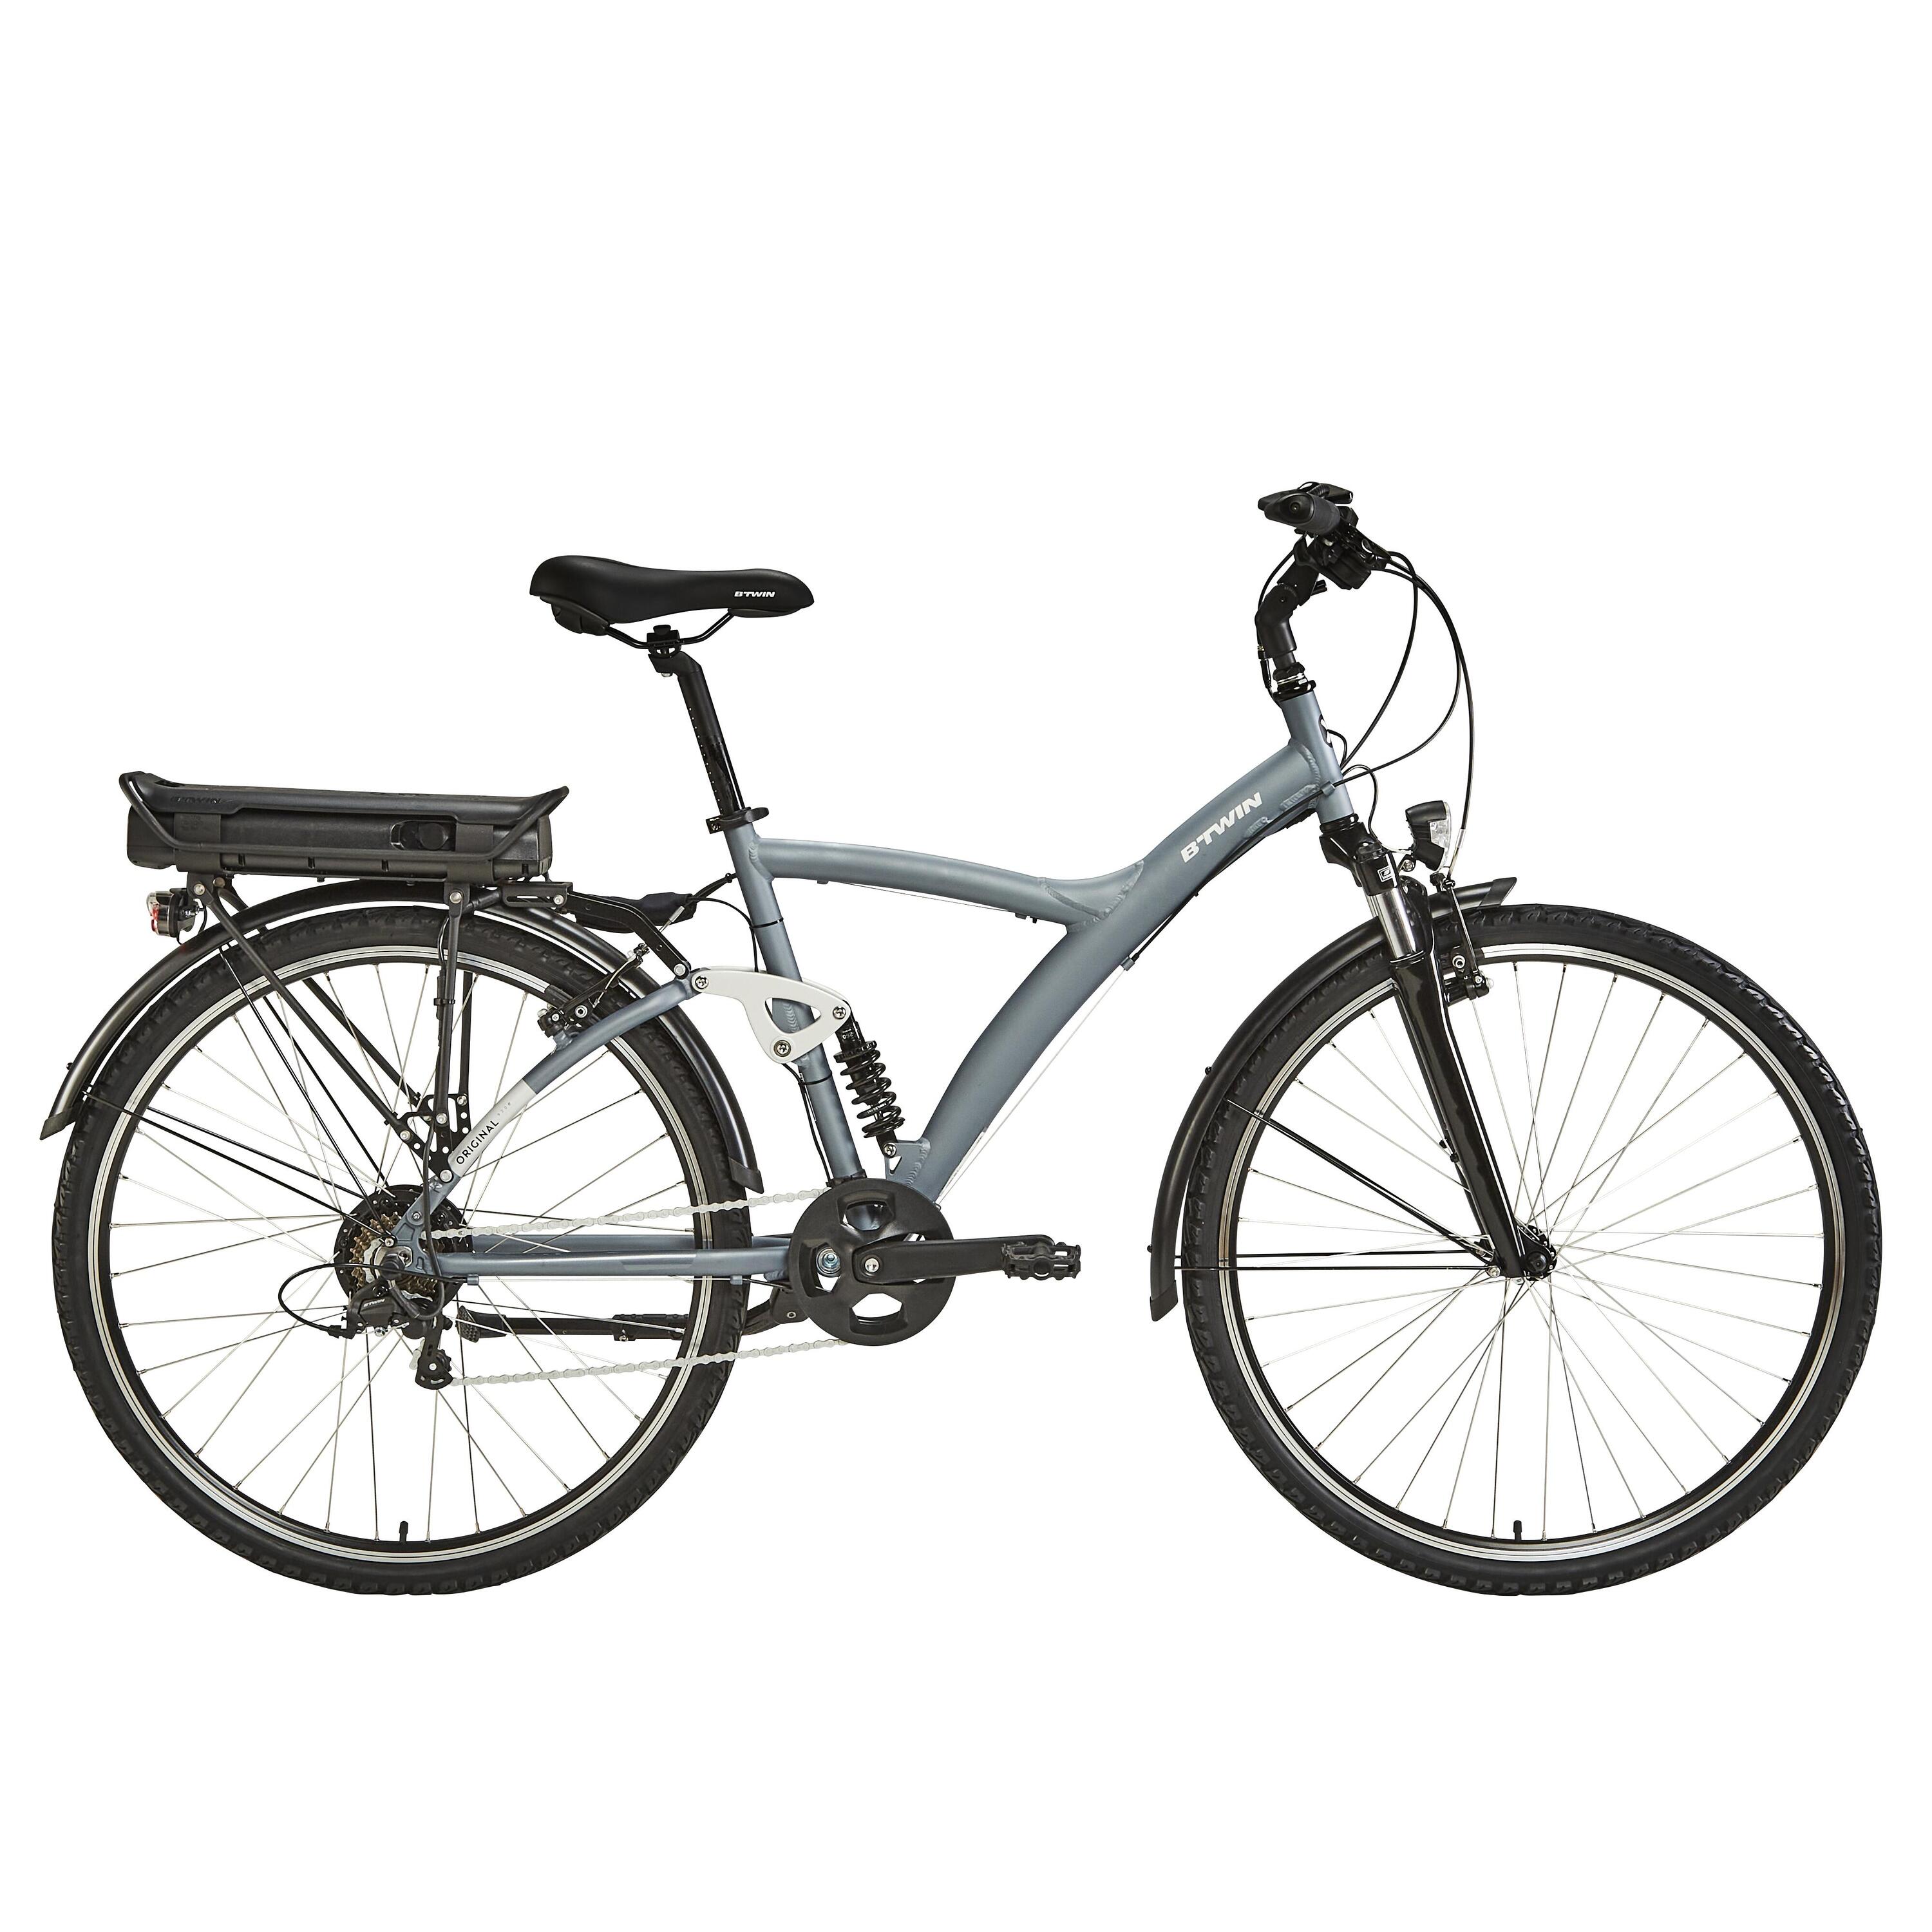 Hybrid and City Bikes